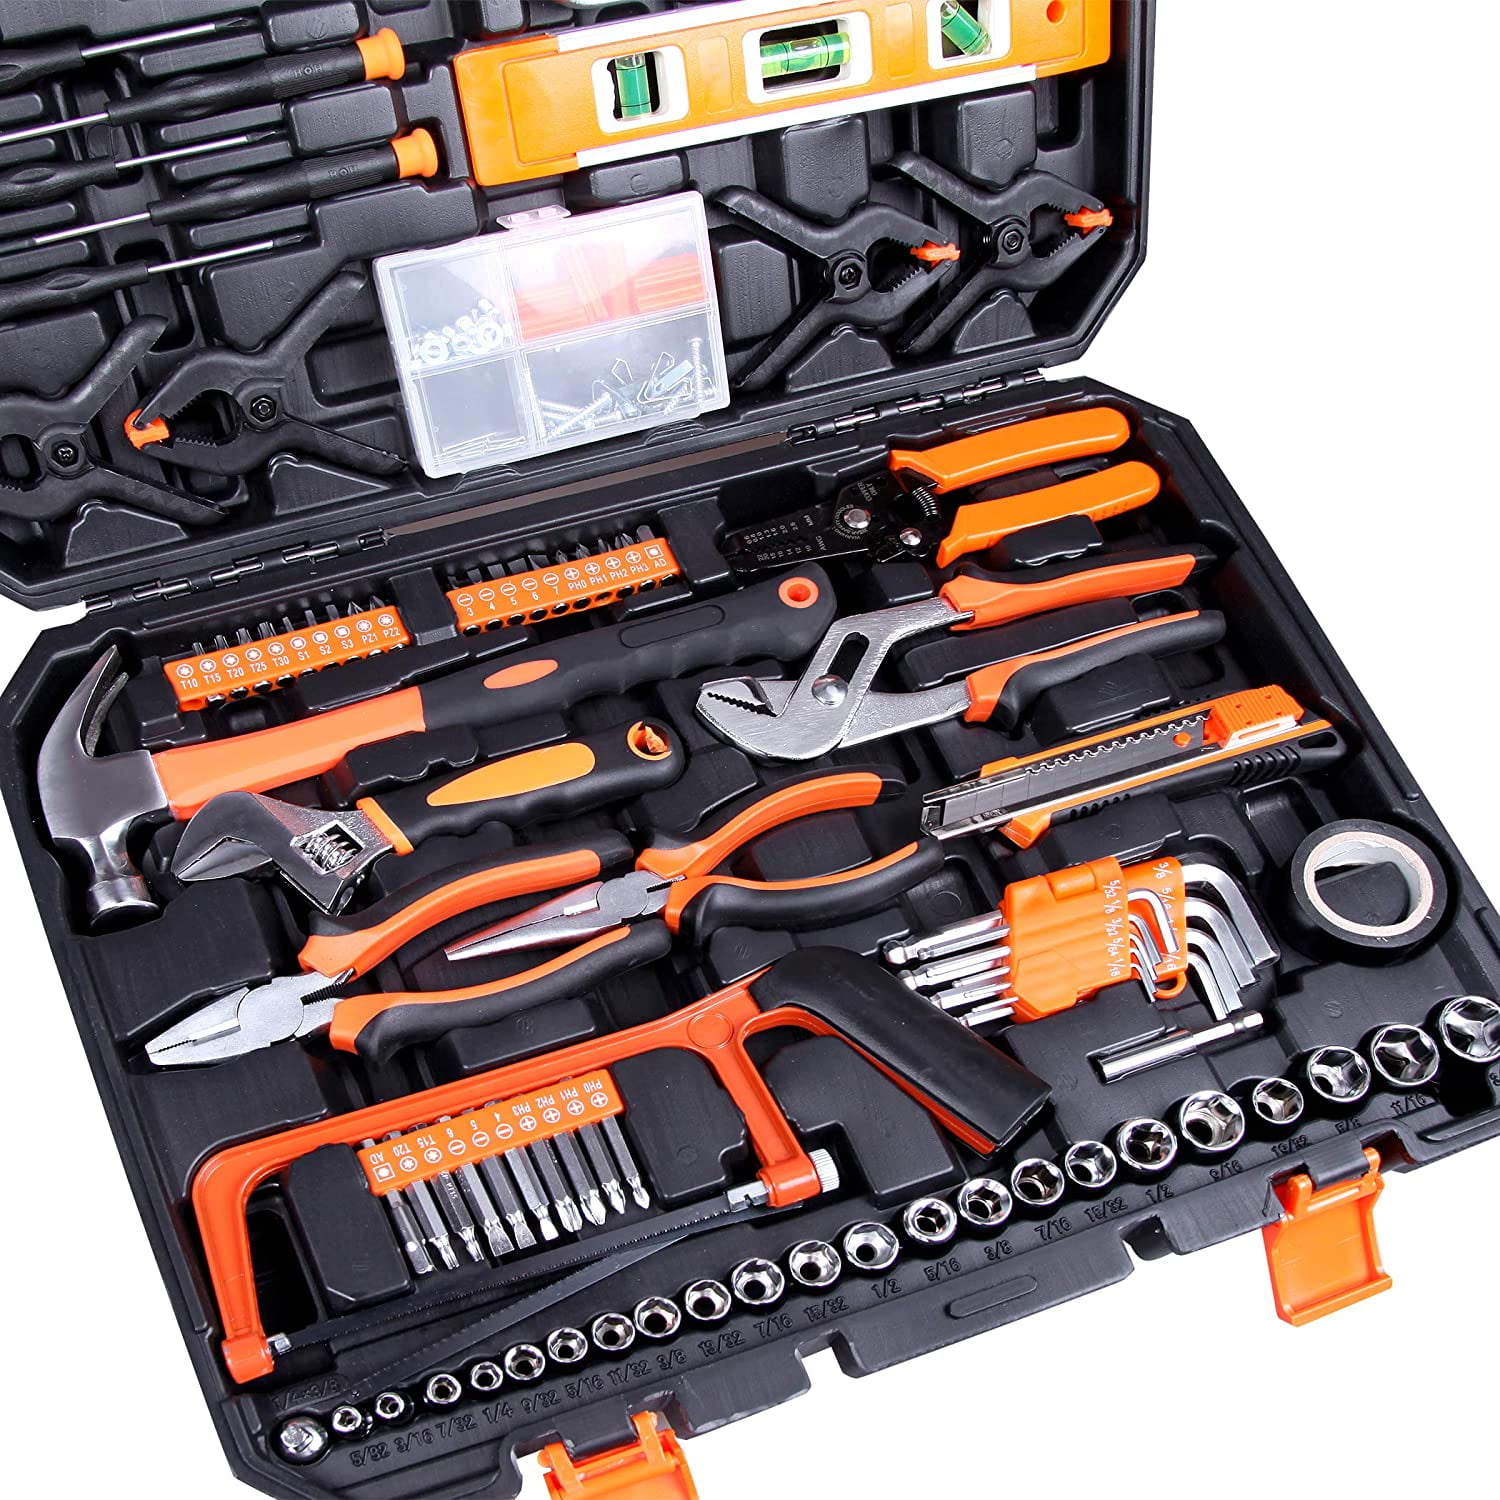 Cartman 160pk Tool Set General Household Hand Tool Kit in Toolbox Storage Case 